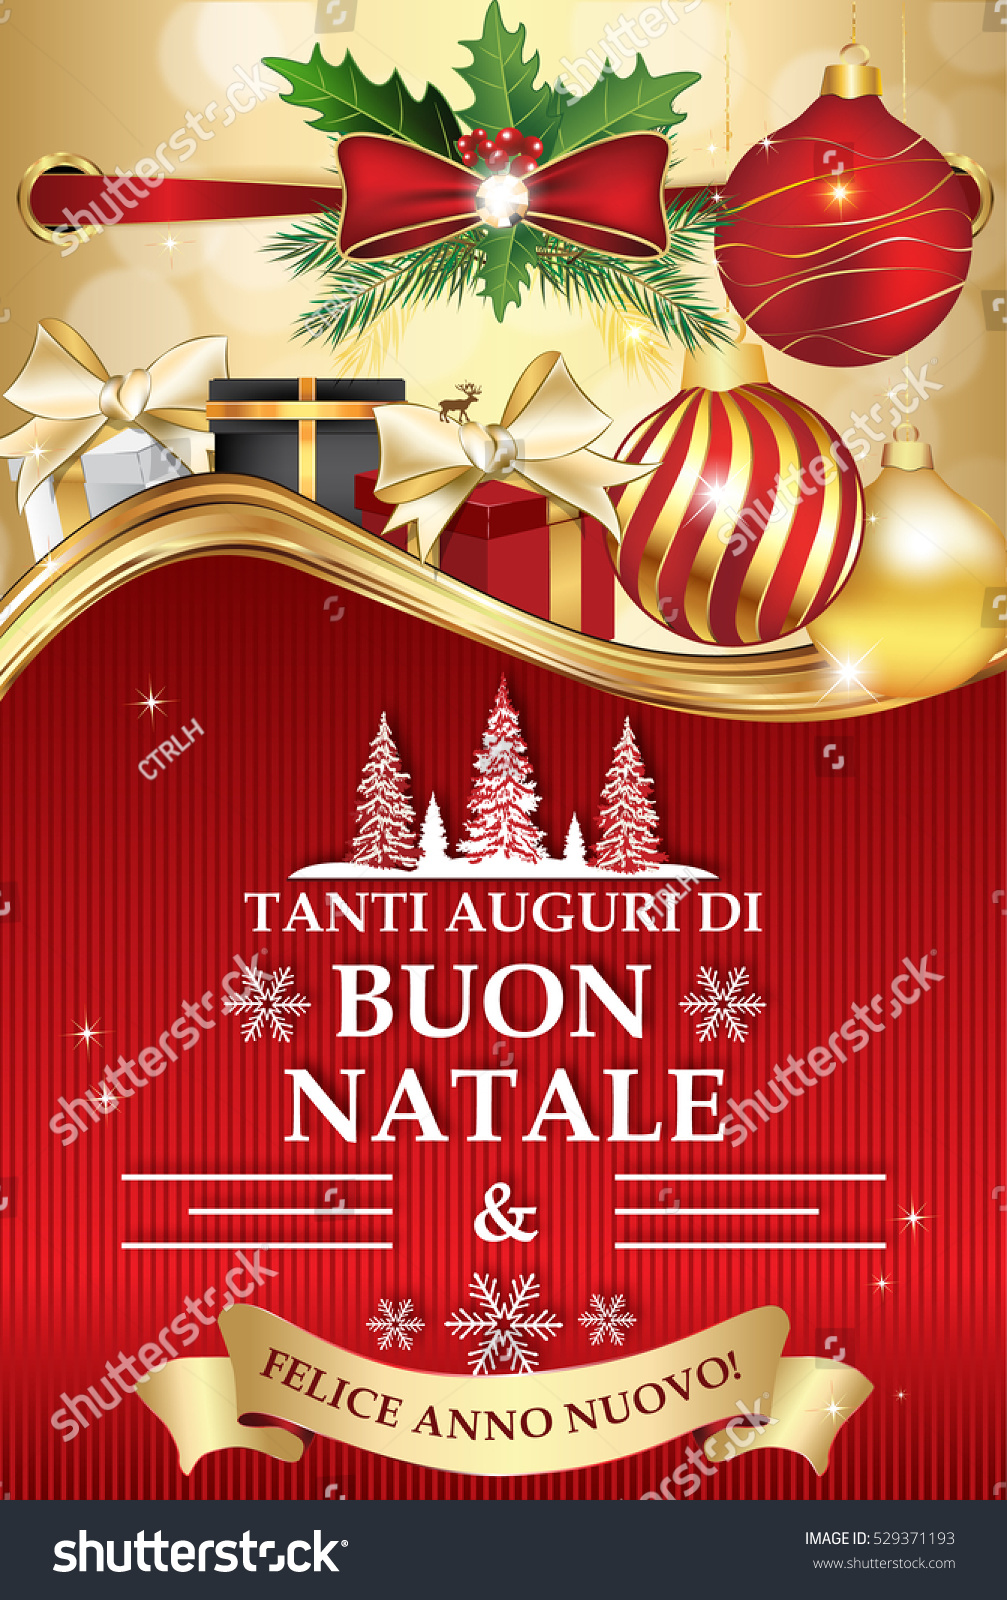 Buon Natale Wishes Italian.Italian Greeting Card Winter Holiday Merry Stock Illustration 529371193